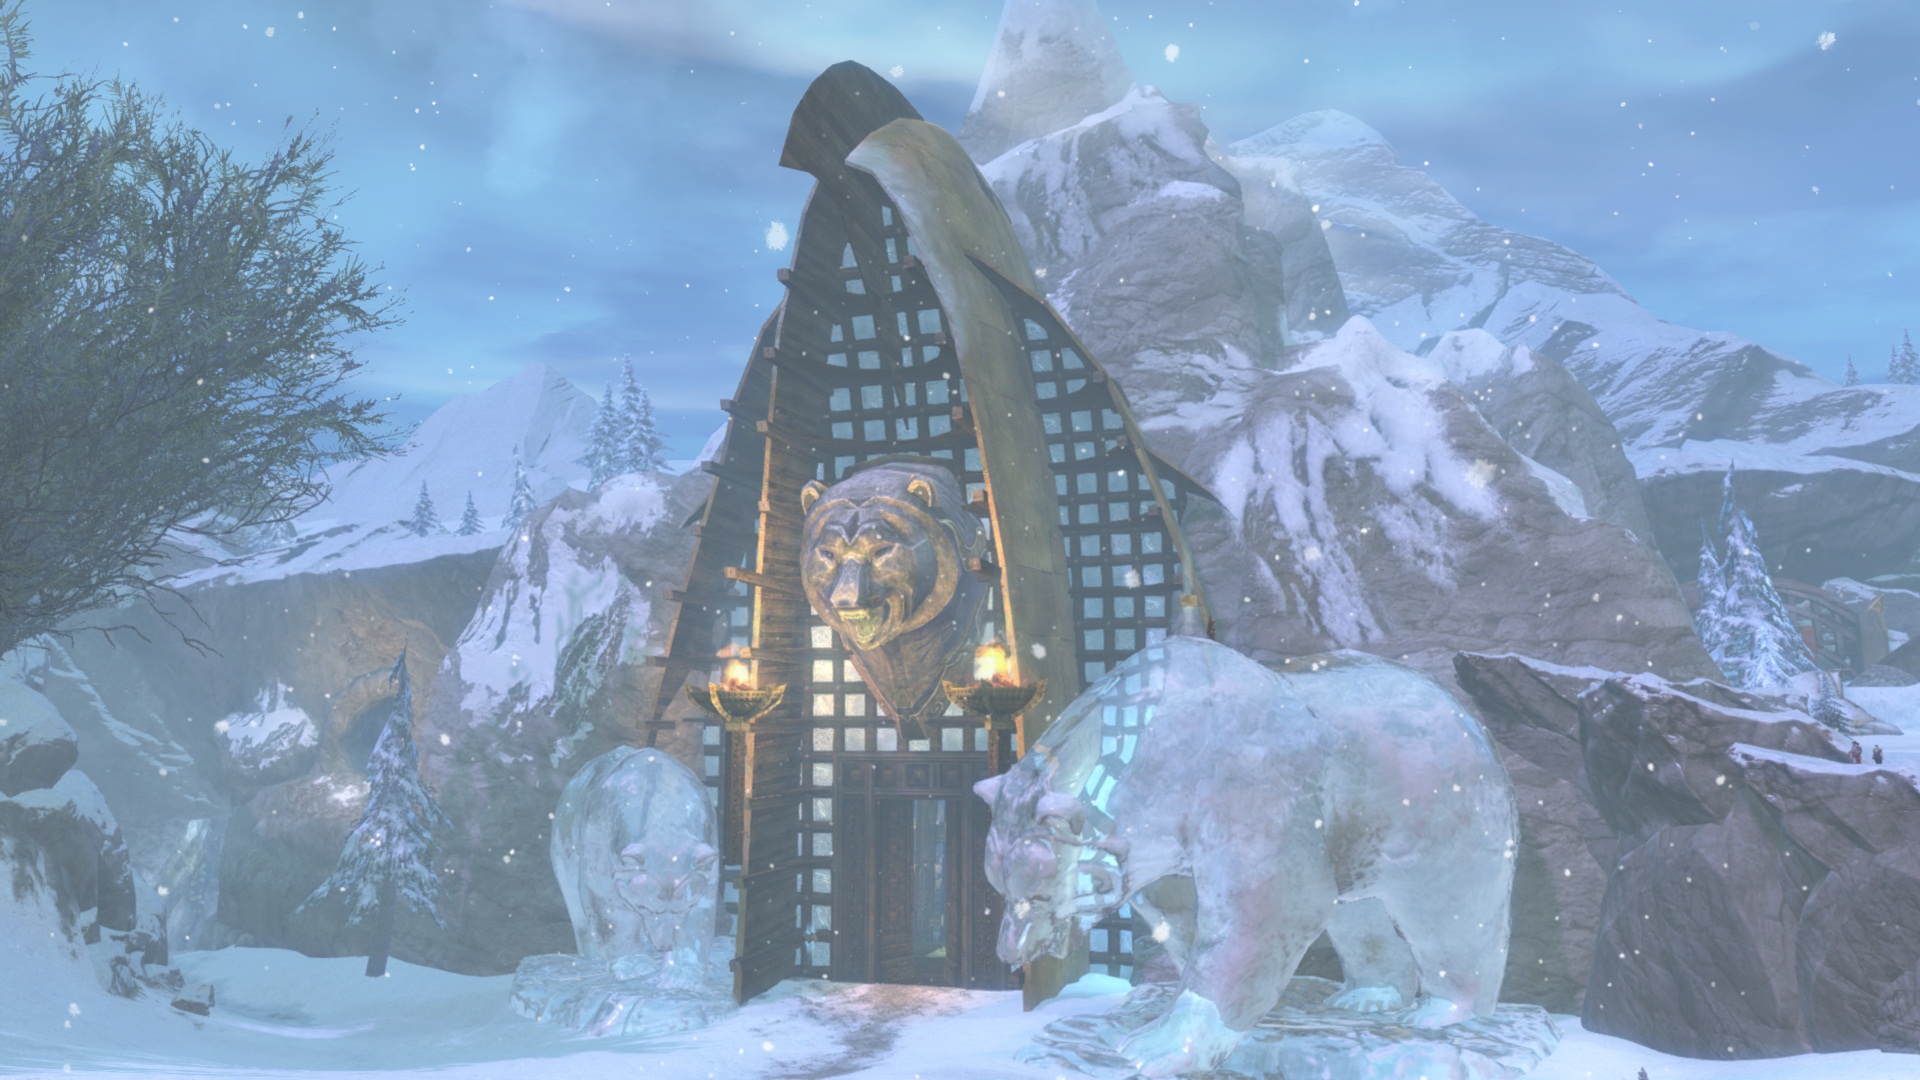 Snowlords Gate Vista